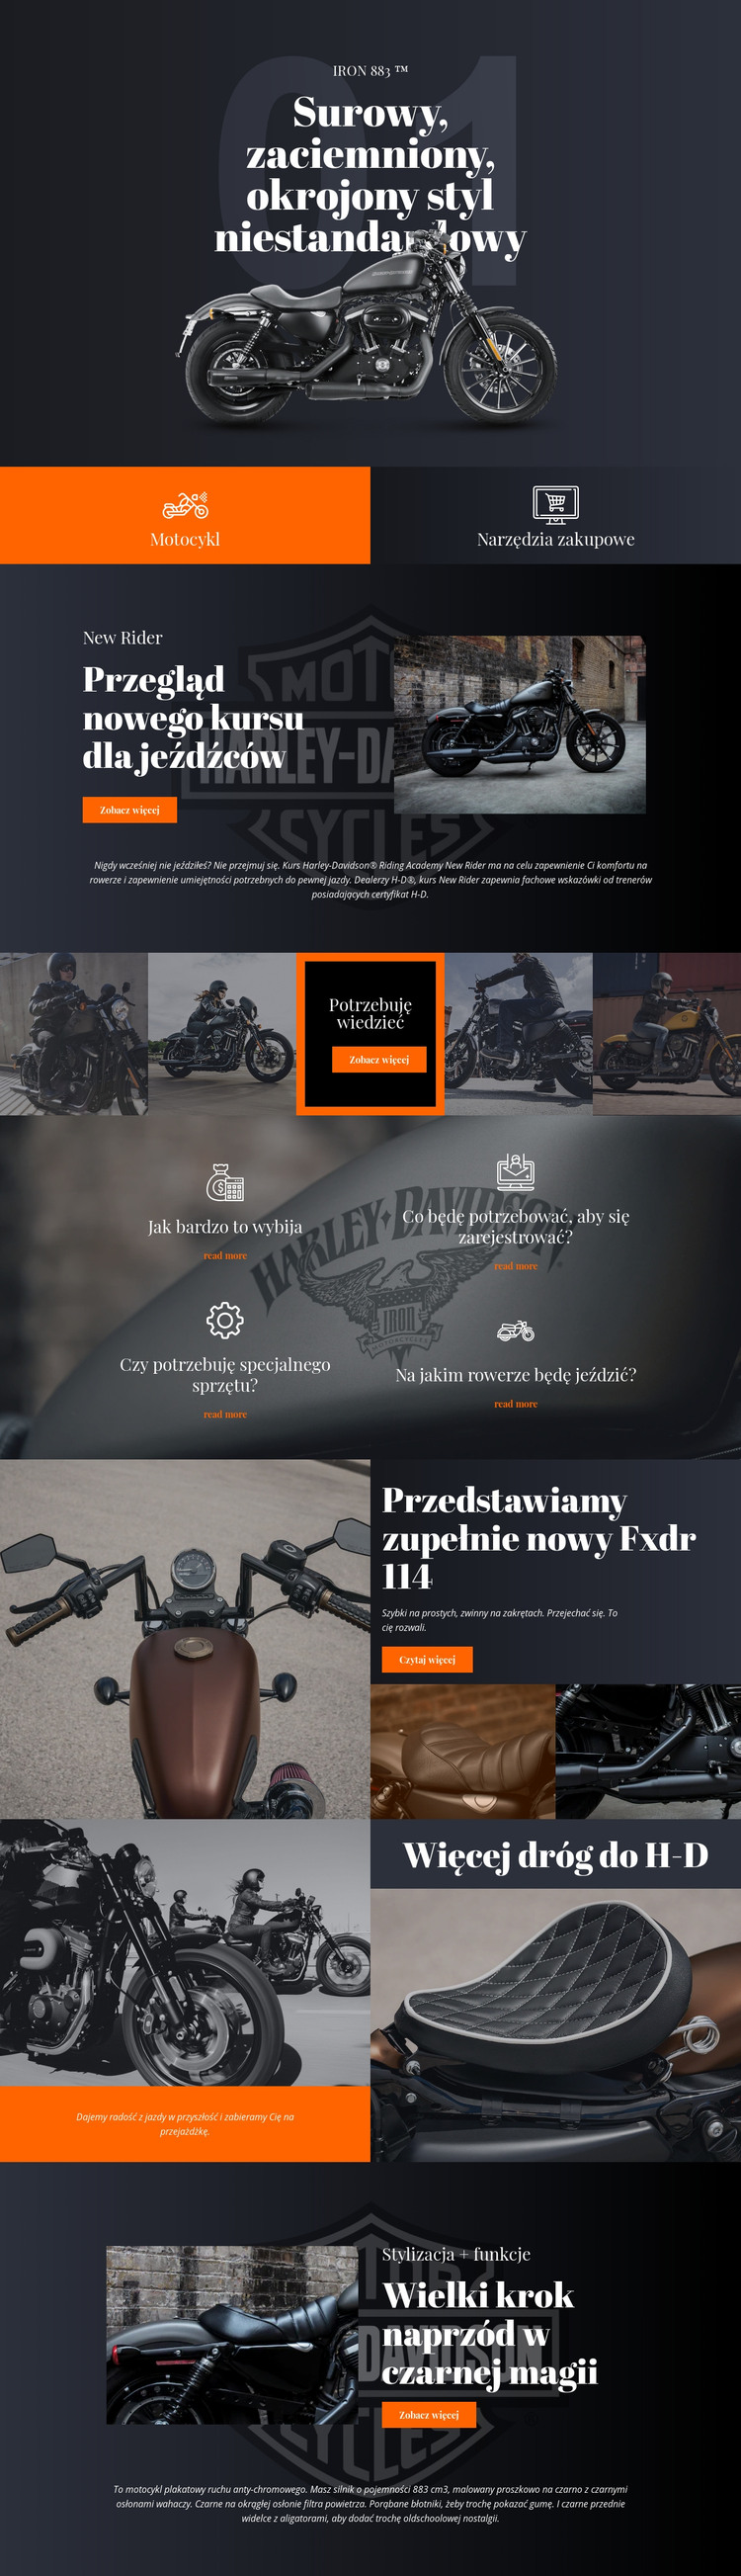 Harley Davidson Szablon HTML